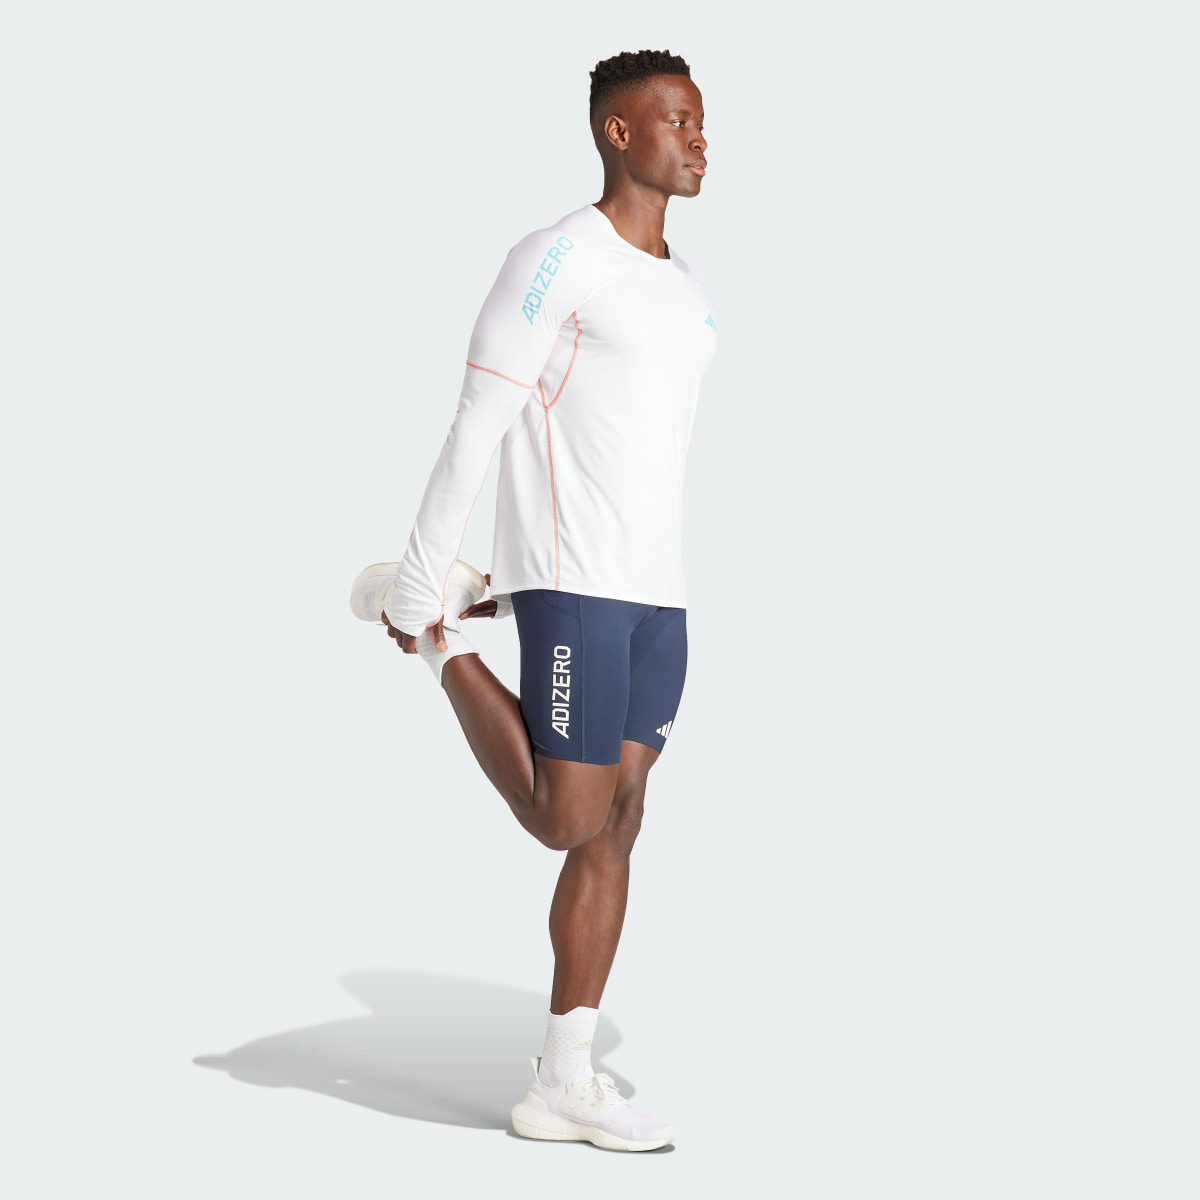 Adidas Adizero Running Long Sleeve Long-Sleeve Top. 4